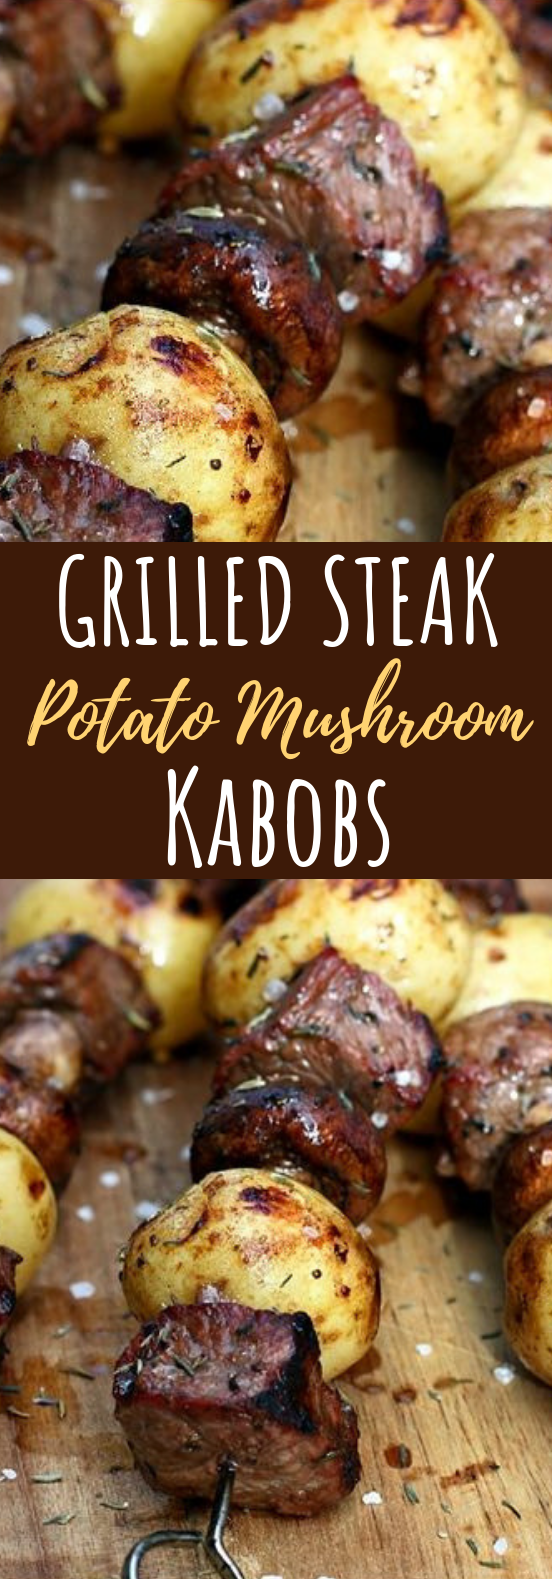 Grilled Steak Potato Mushroom Kabobs #partyfood #lunch